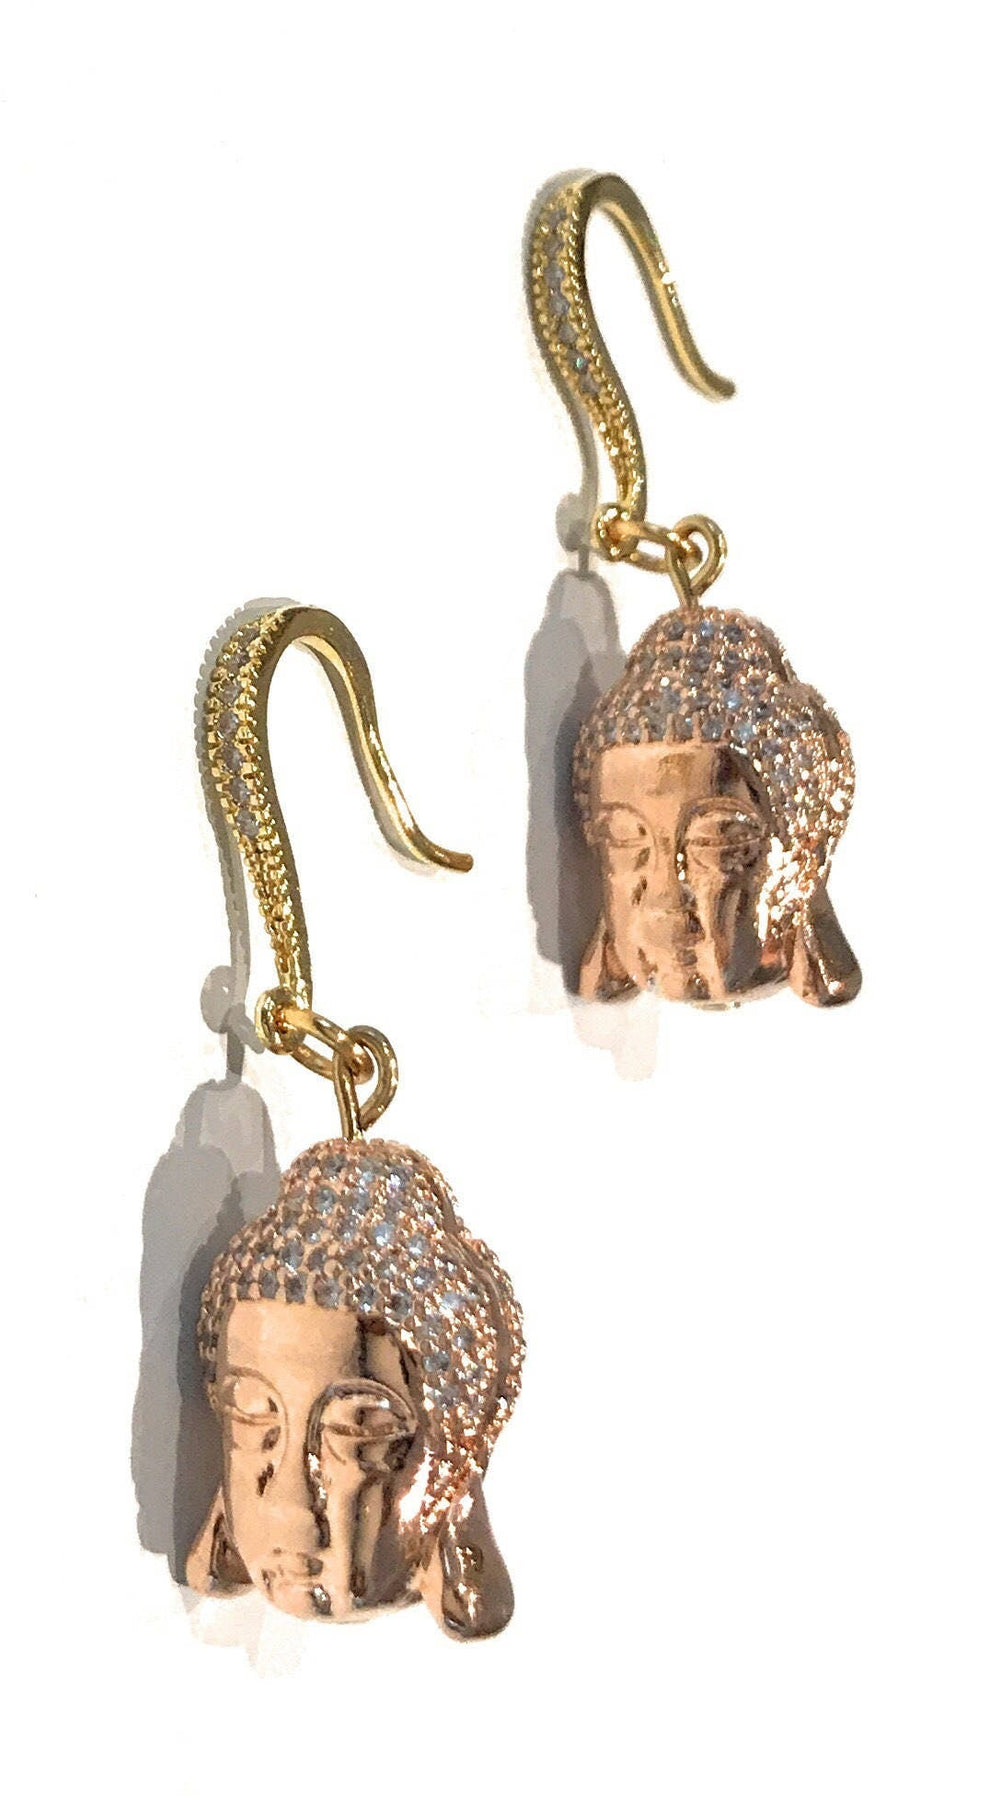 Buddha Earrings, Religious Jewelry, Spiritual Jewelry, Buddhist